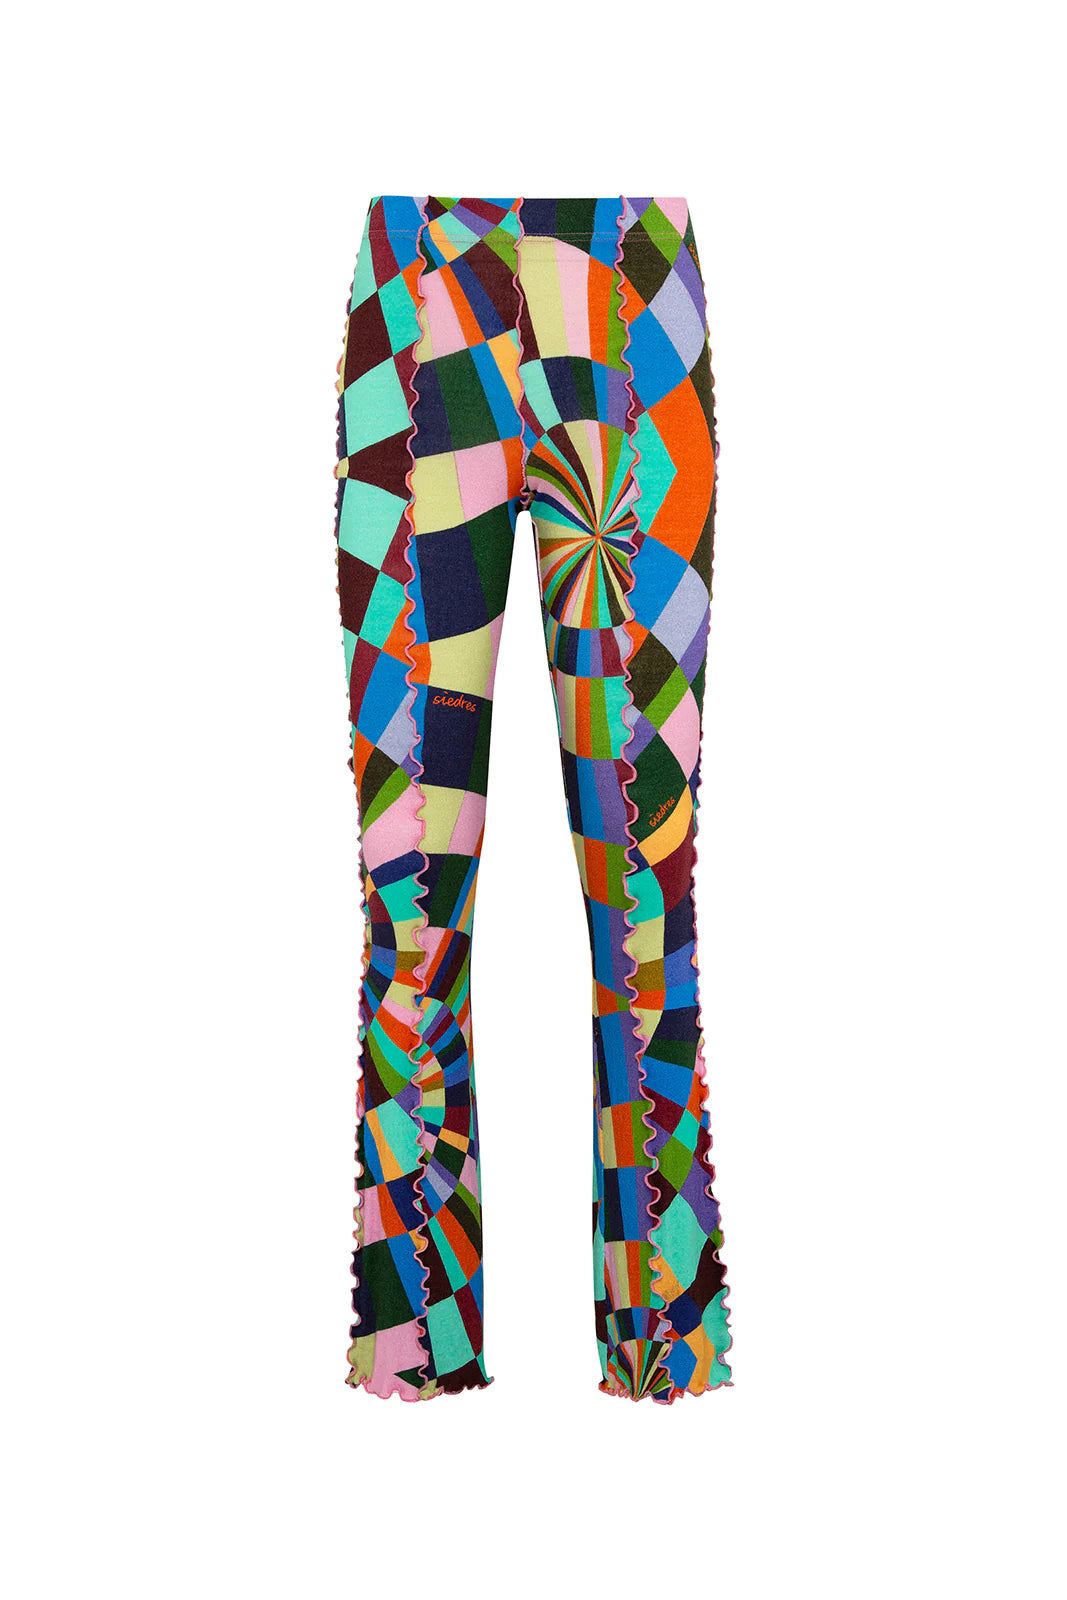 FLO - Kaleidoscope Knit Pants